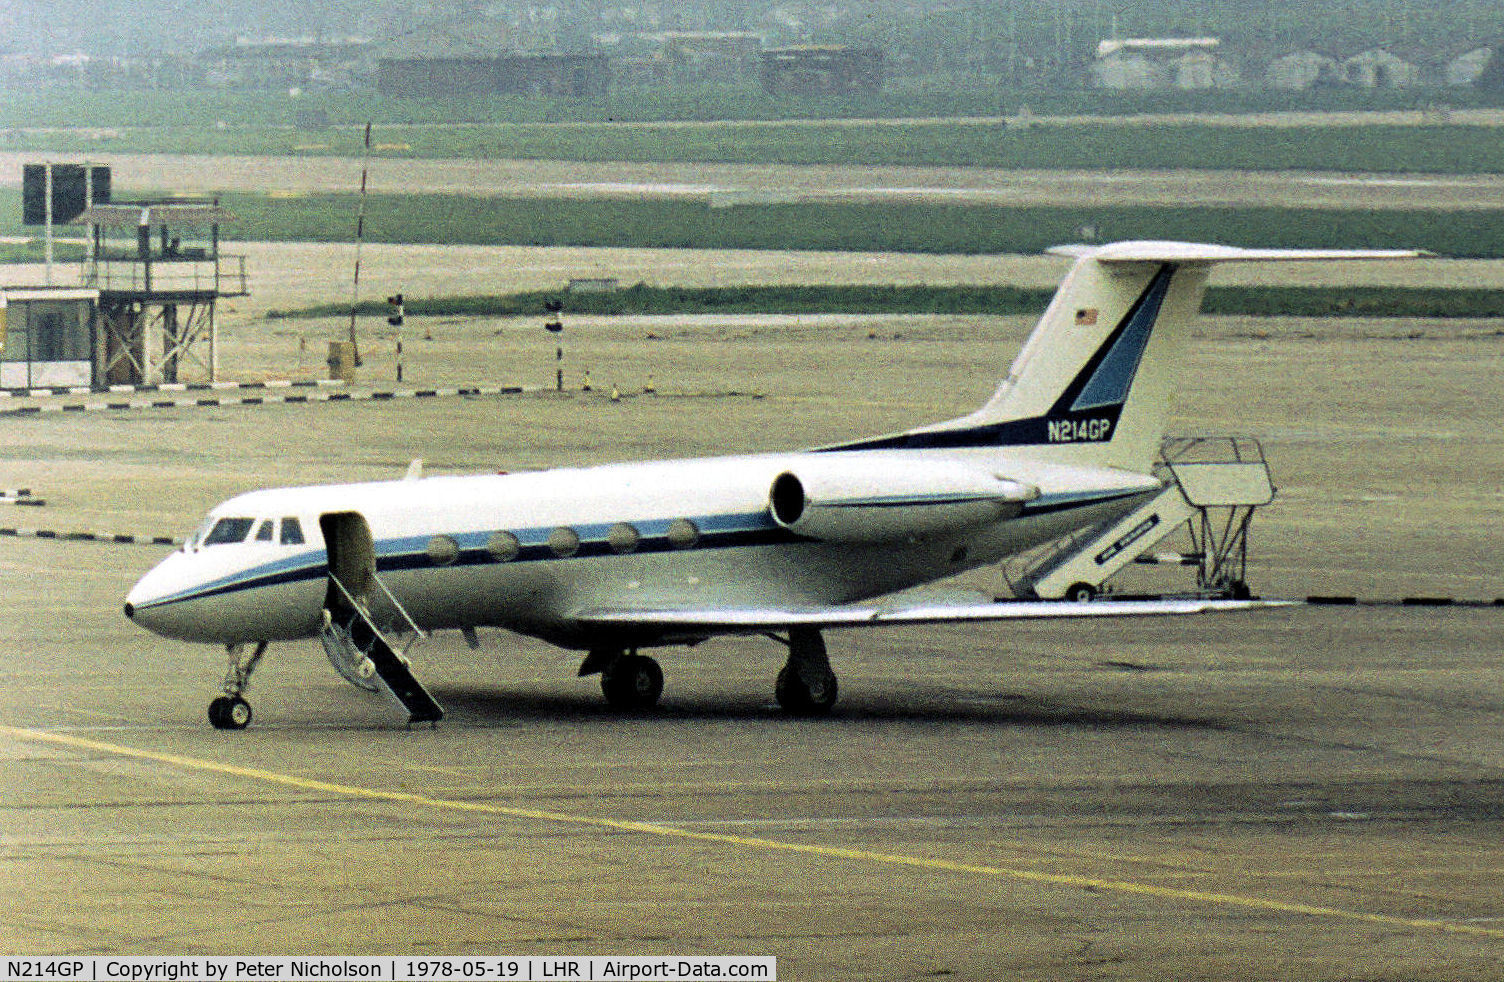 N214GP, 1967 Grumman G1159 Gulfstream II C/N 003, This Gulfstream II of the Gillette Company was a visitor to Heathrow in May 1978.